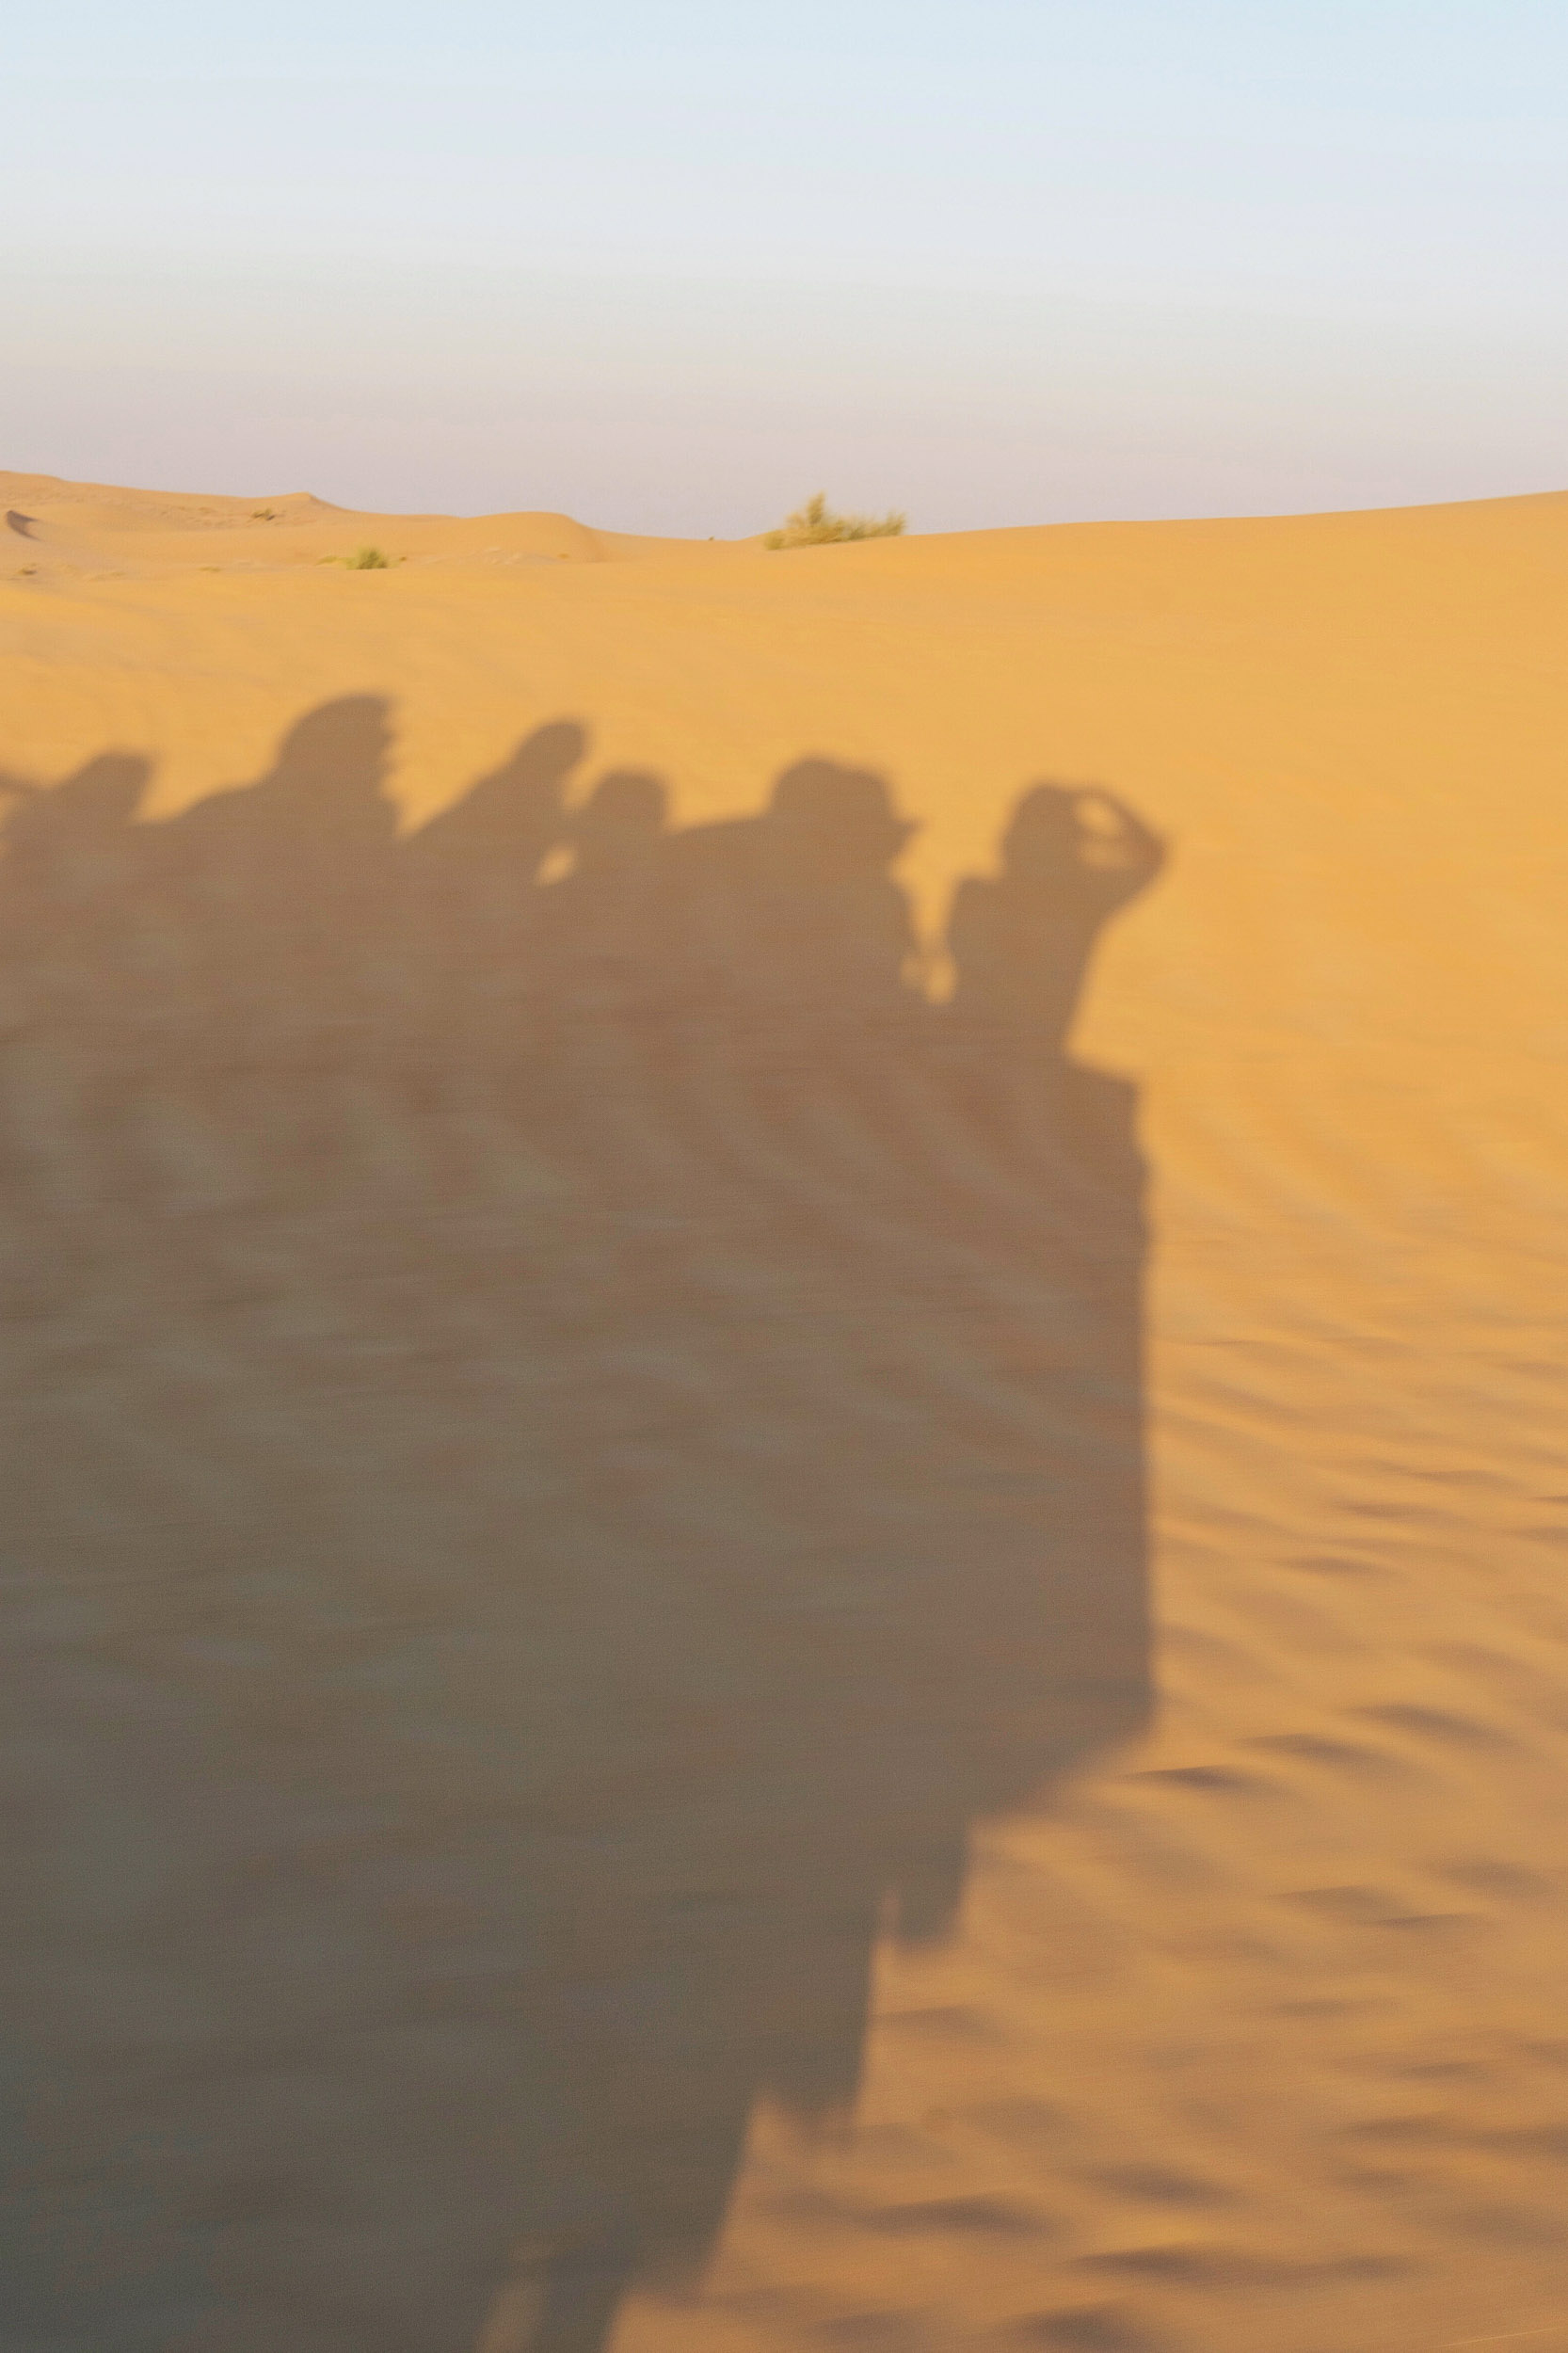 Riding through the desert during our Dubai desert safari